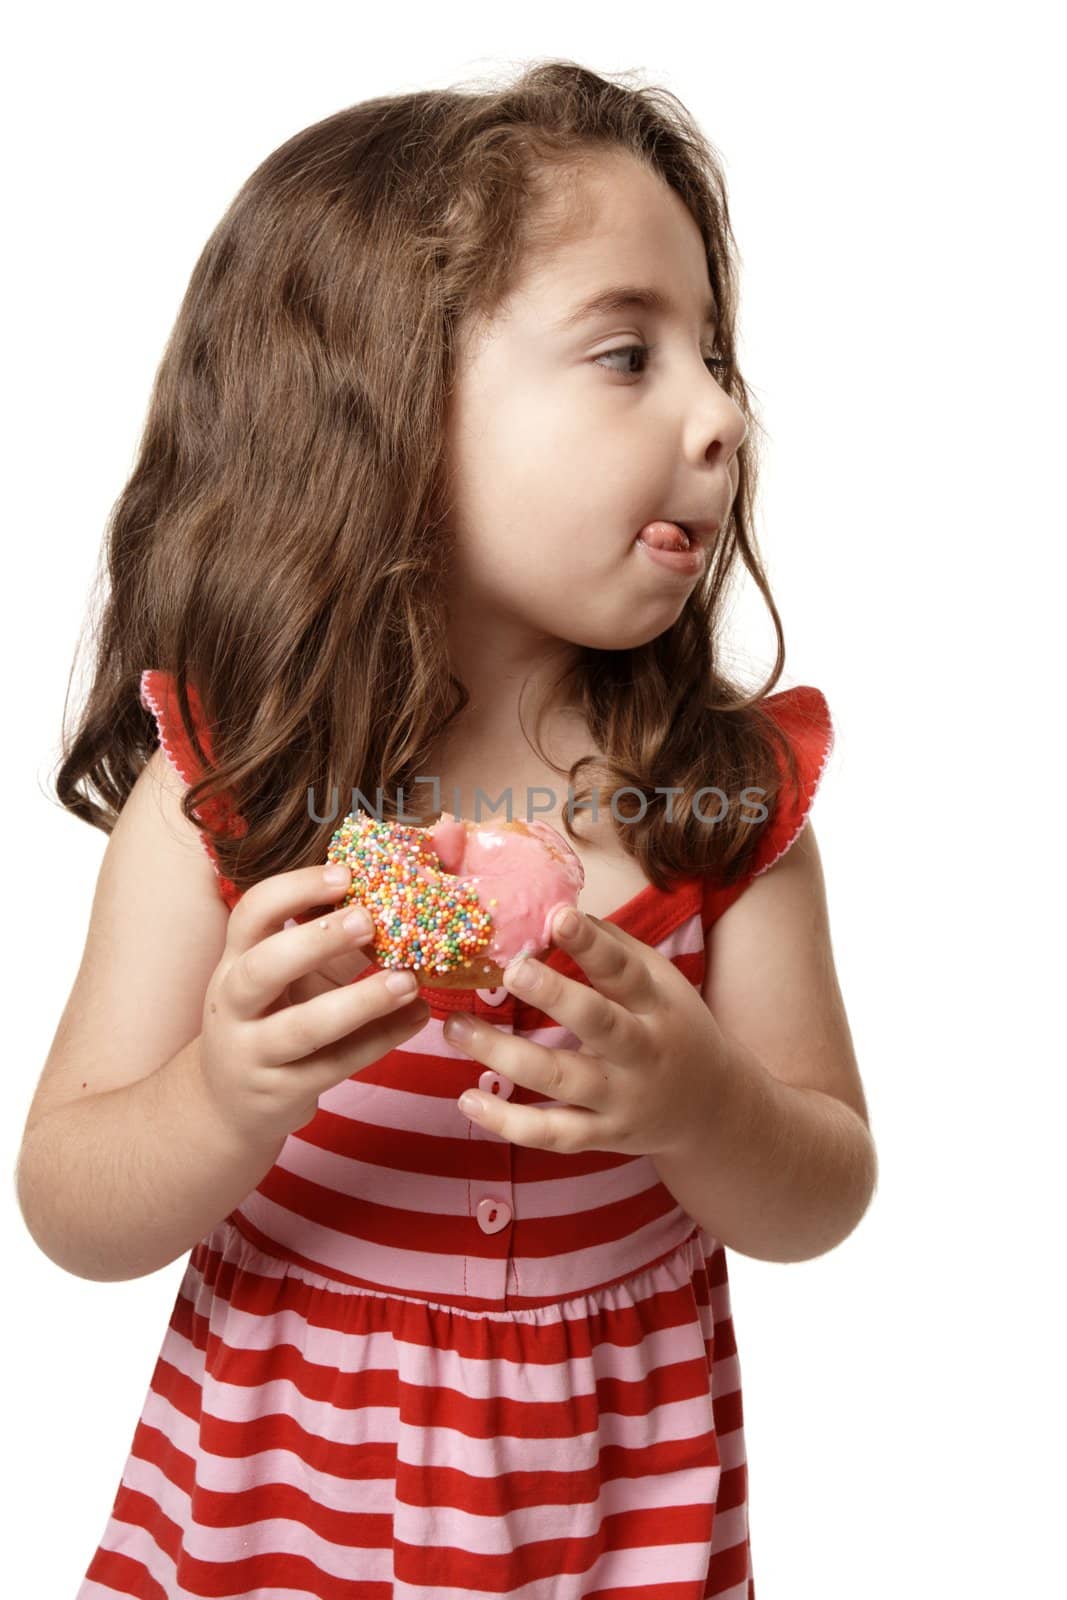 Little girl tasty sweet doughnut by lovleah